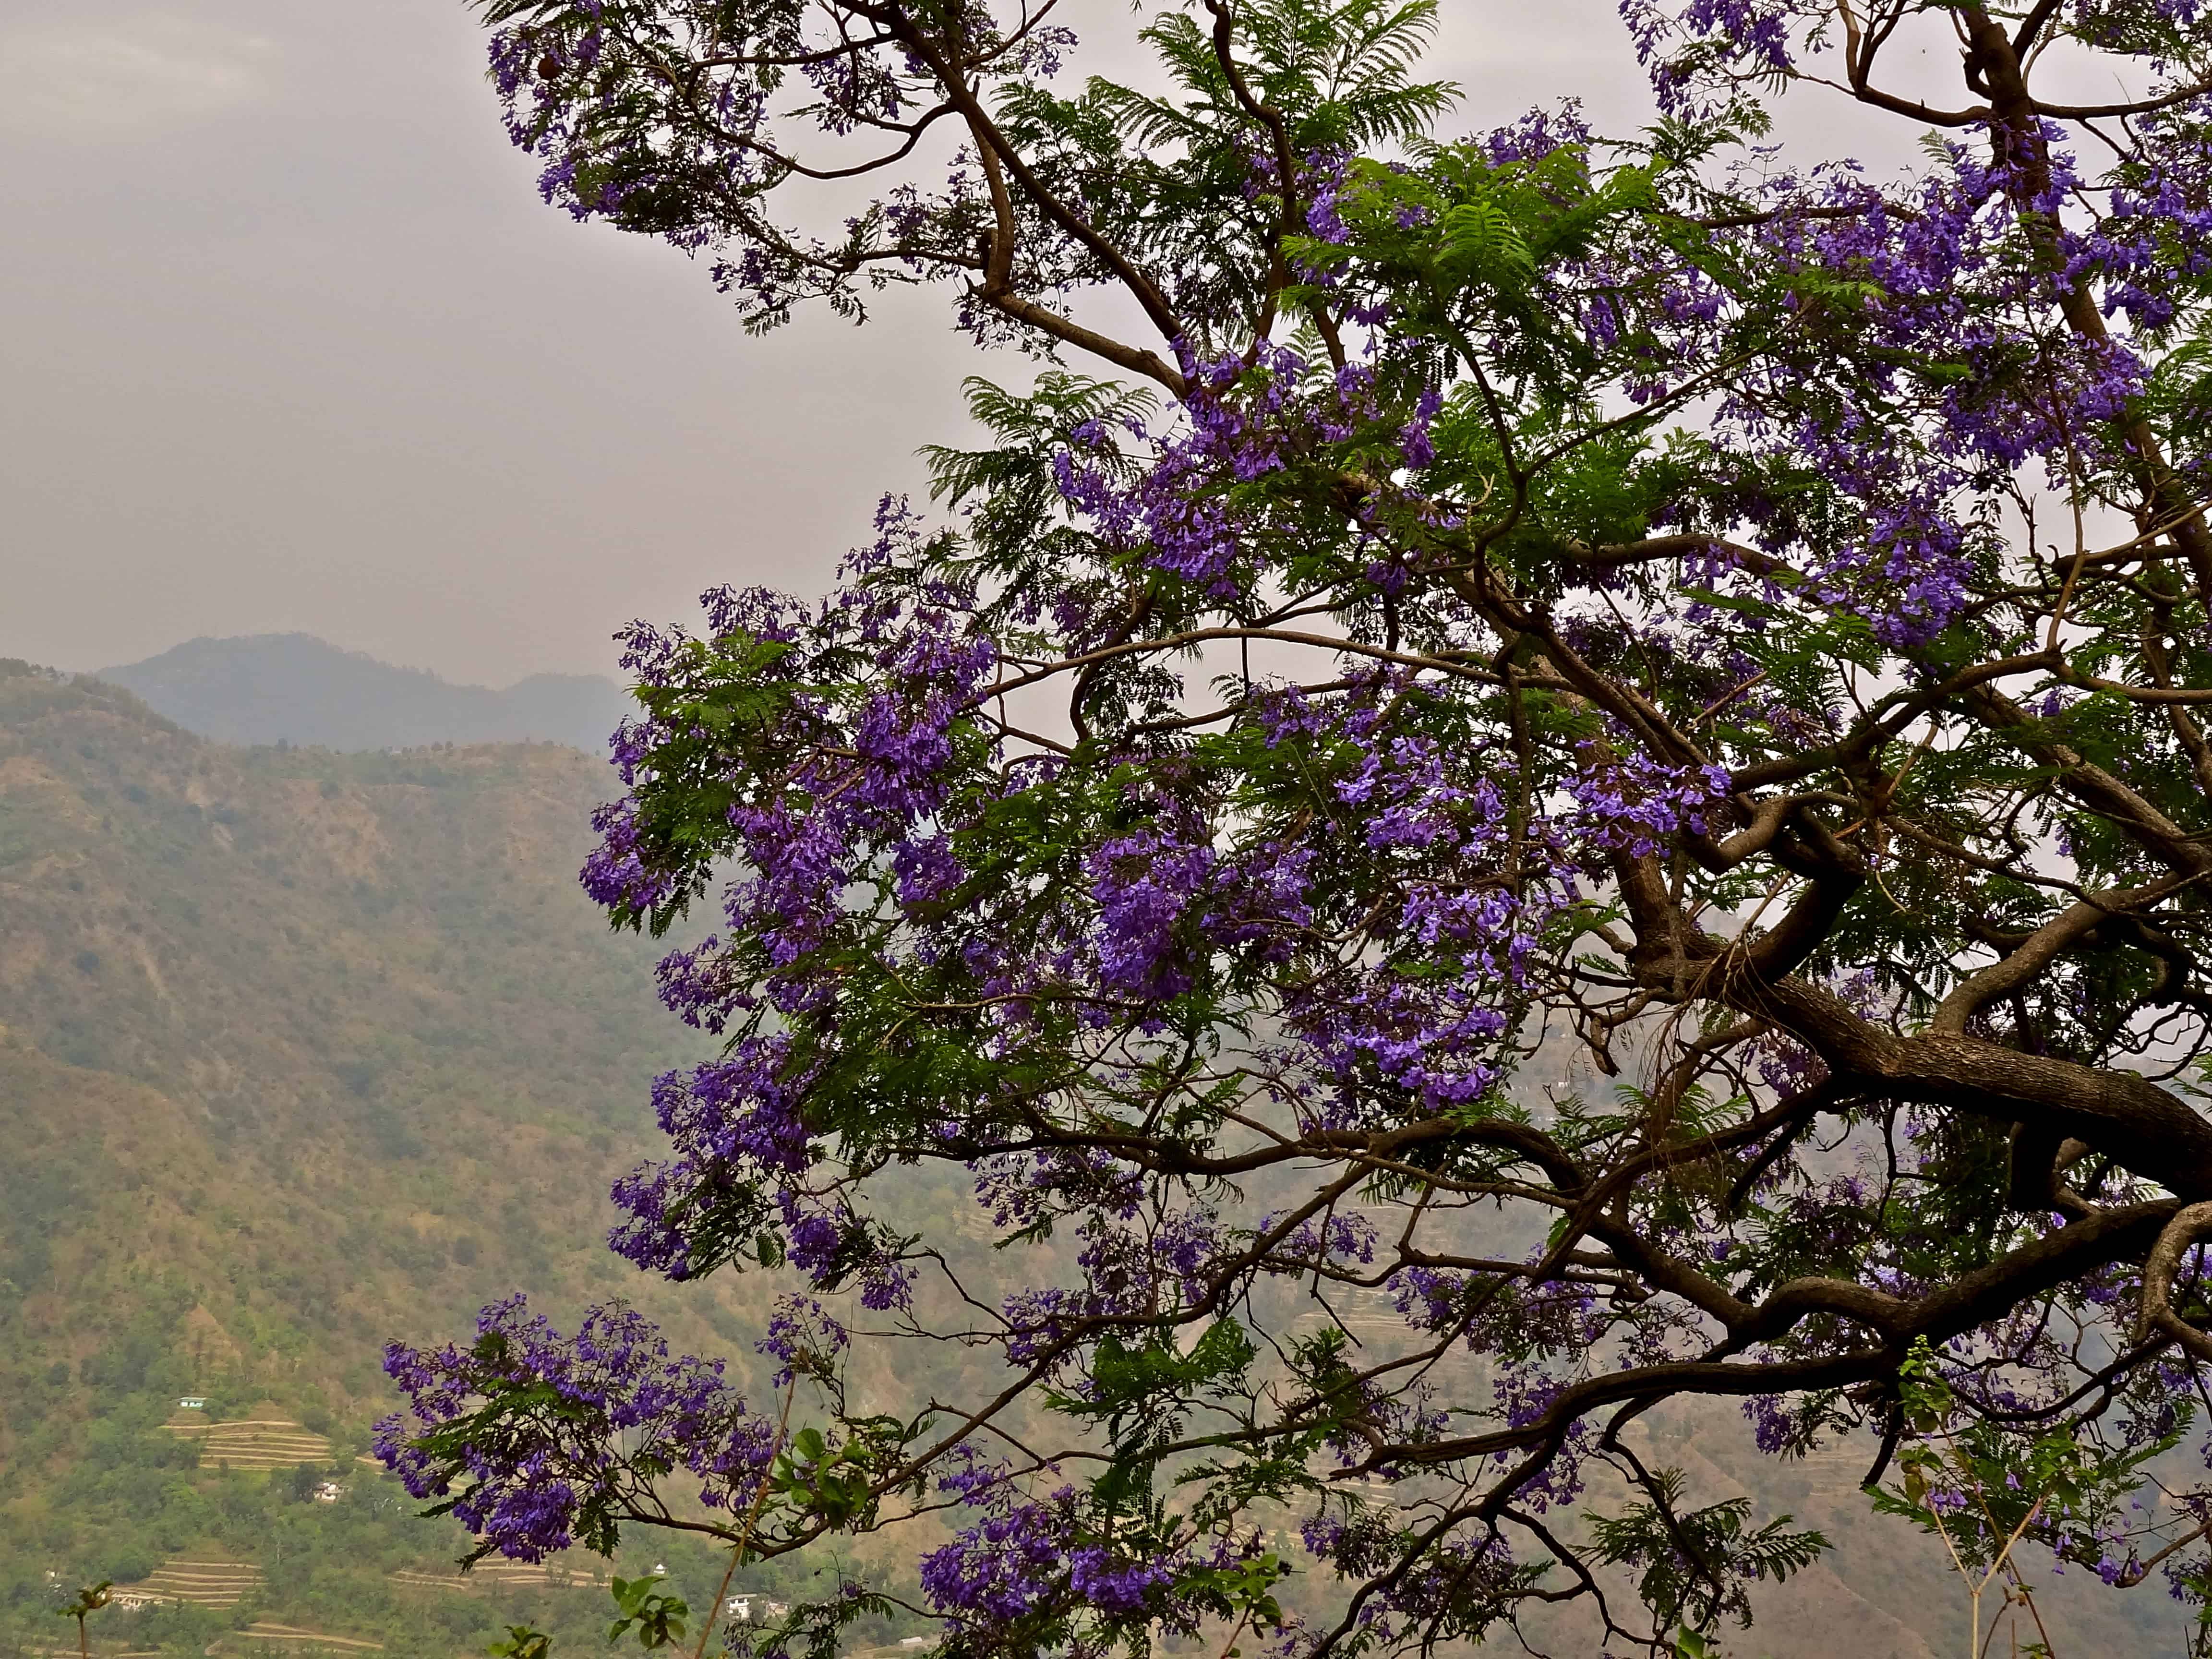 Uttarakhand trees, Uttarakhand flowers, Himalayas flowers, jacaranda tree